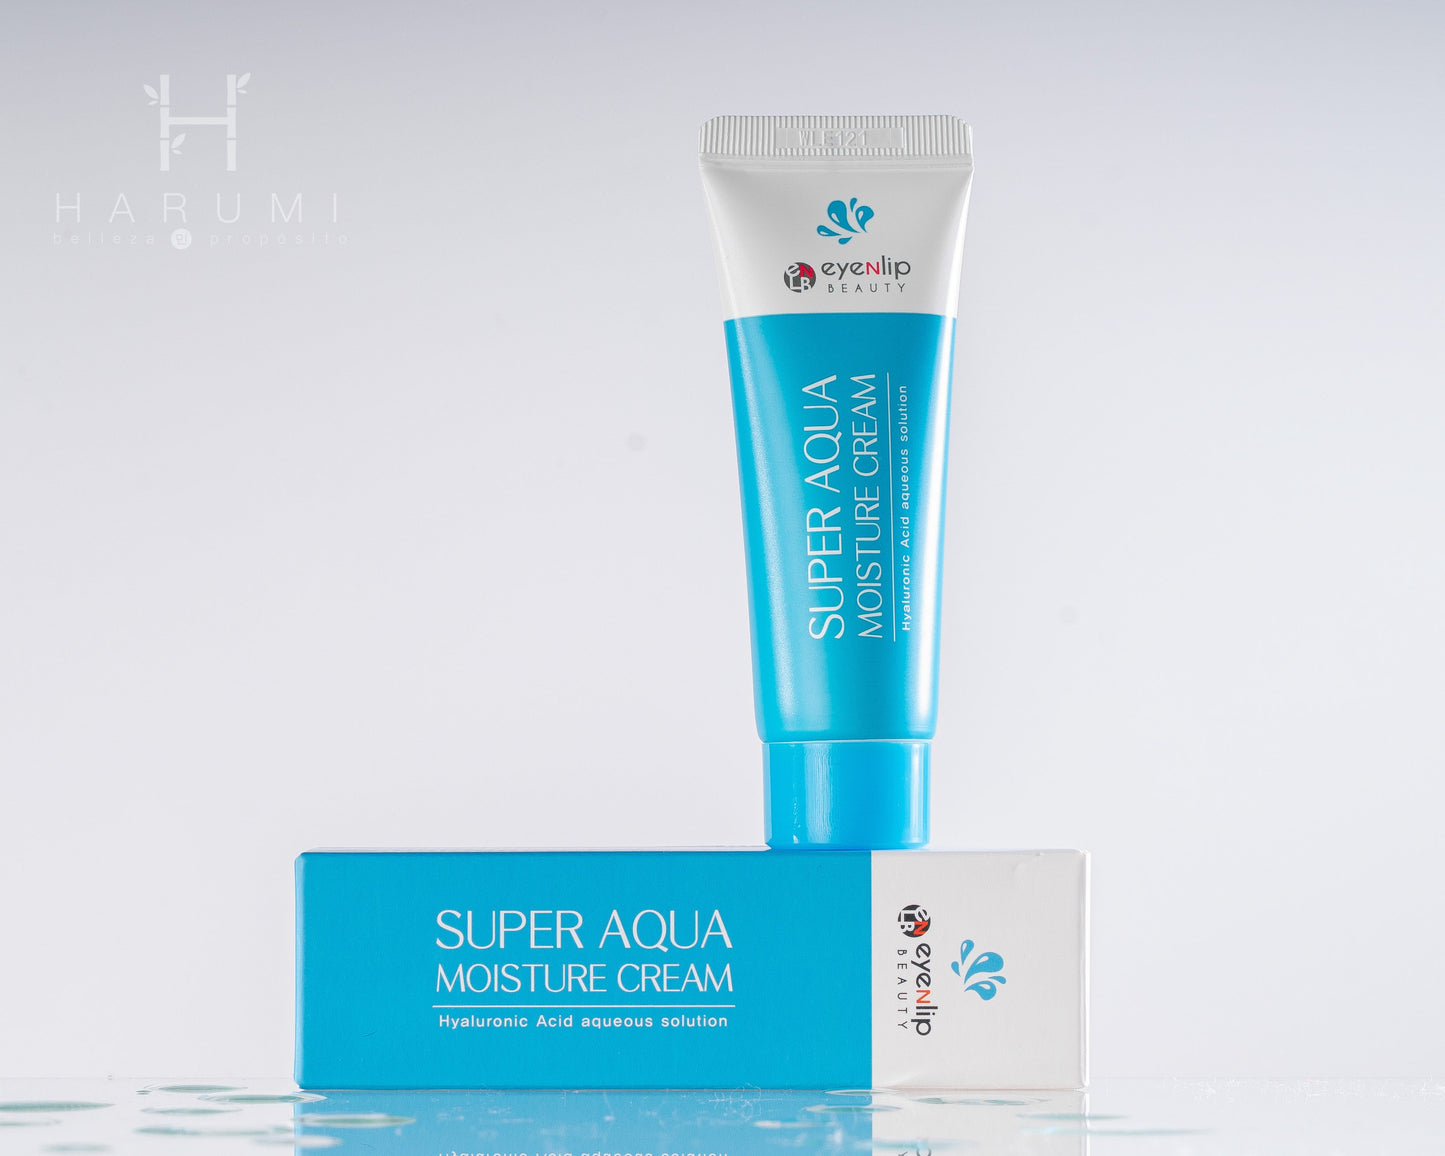 Eyenlip Super Aqua Moisture Cream Skincare maquillaje productos de belleza coreanos en Colombia kbeauty